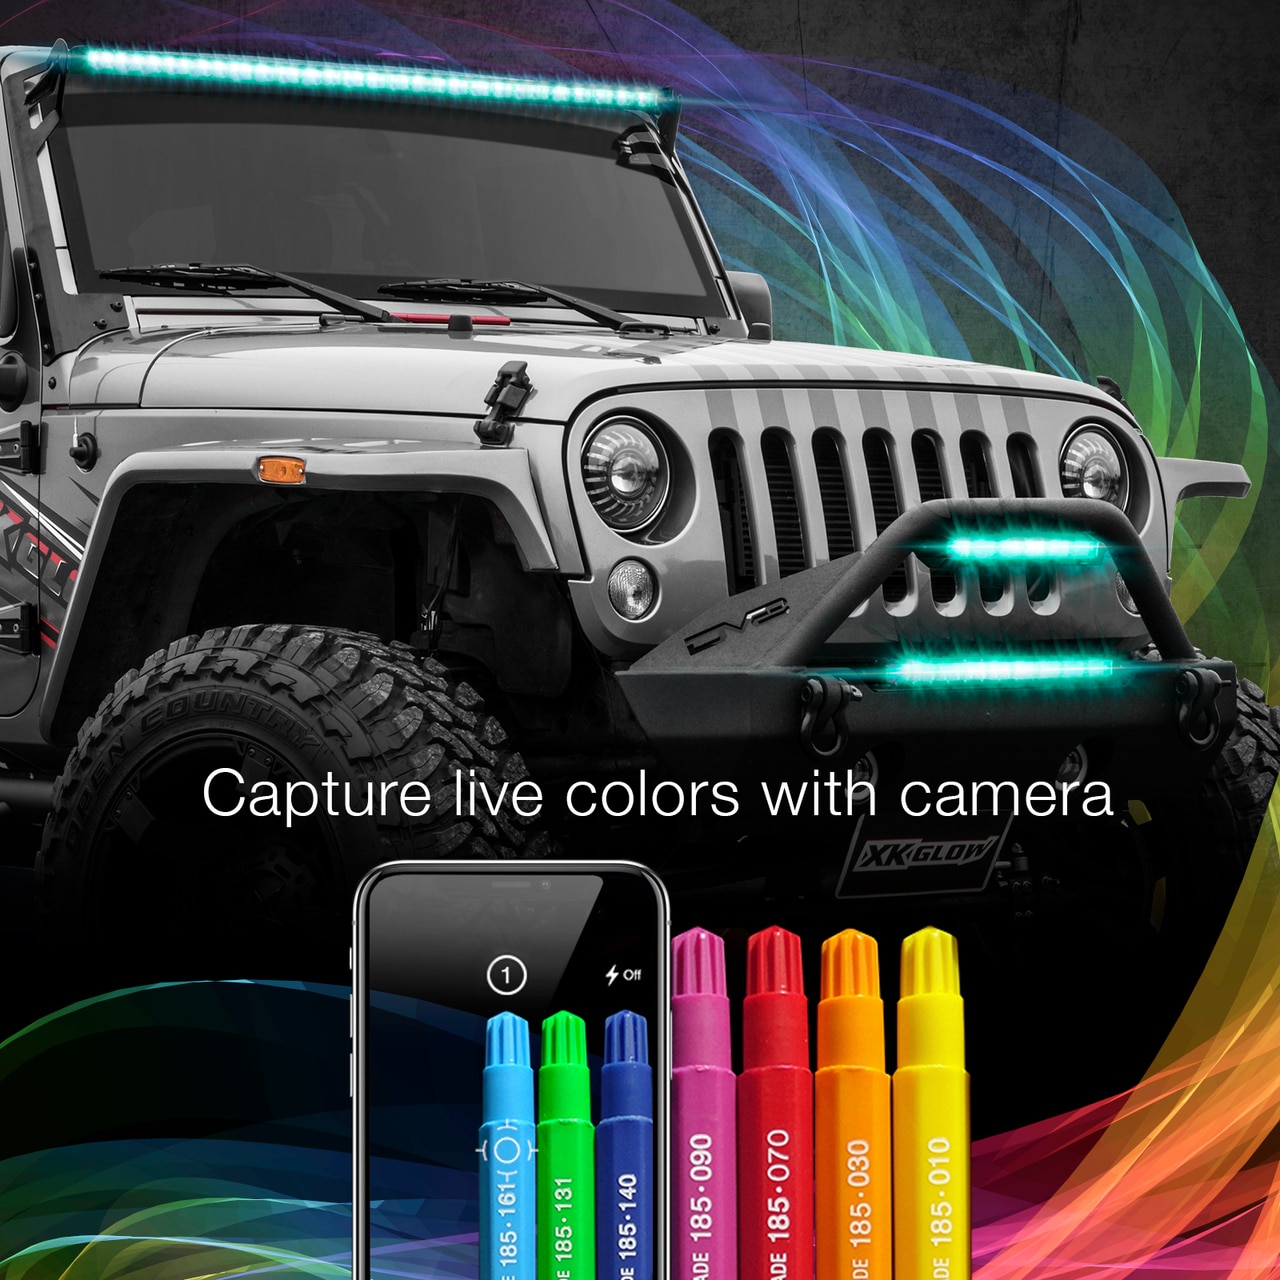 32" Multi-Color XKChrome RGBW LED Light Bar w/Bluetooth - Click Image to Close